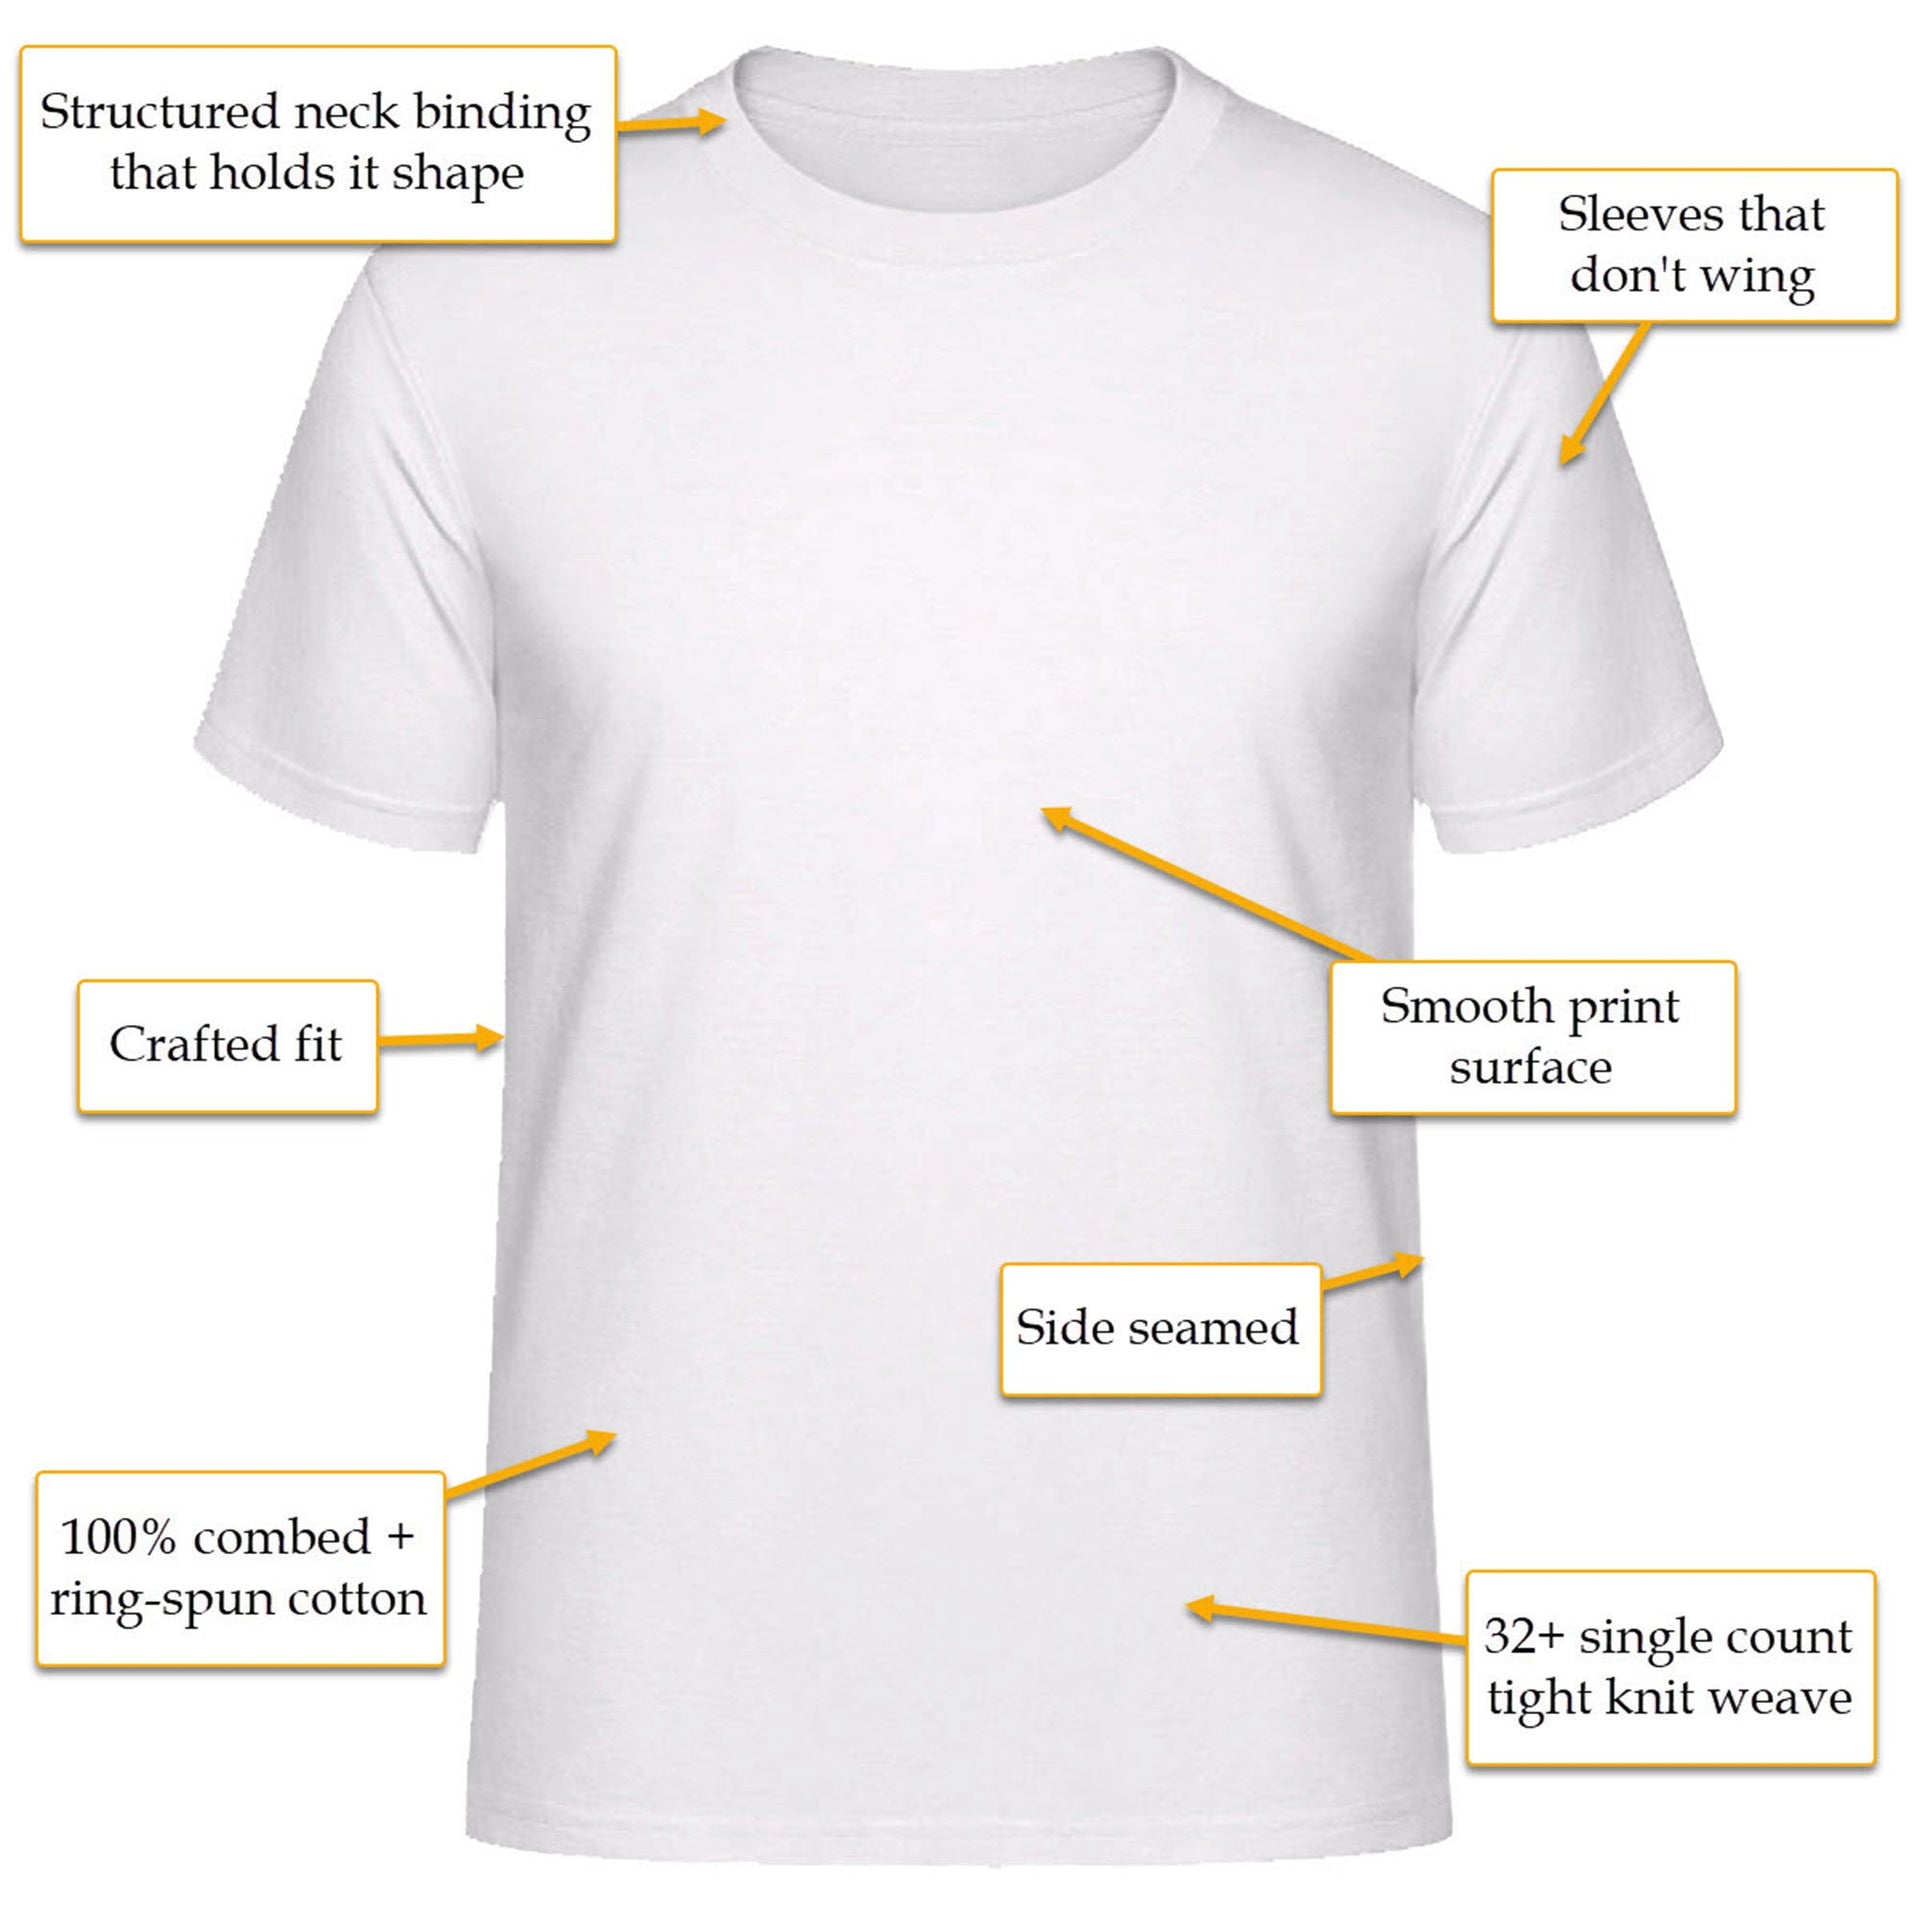 Small Talk Survivor Club Graphic T-shirt - Clothing - Harvey Ltd